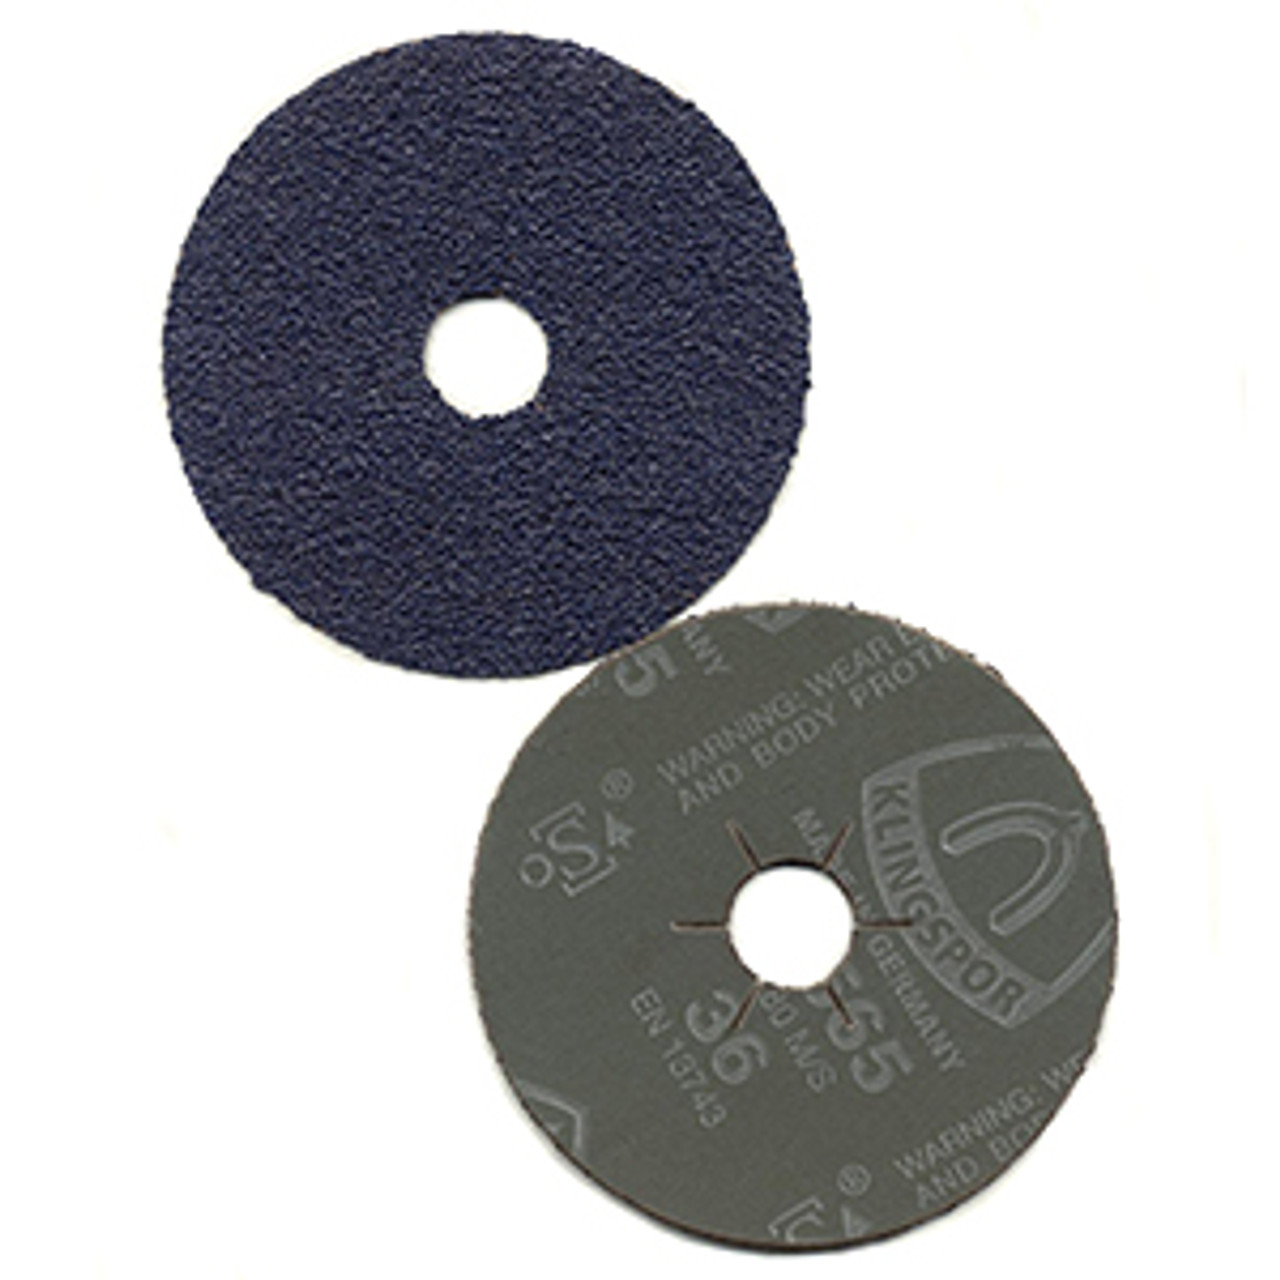 Klingspor Abrasives Alumina Zirconia CS565 Fibre Discs, 60 Grit, 7"x 7/8" Center Hole, 5pk